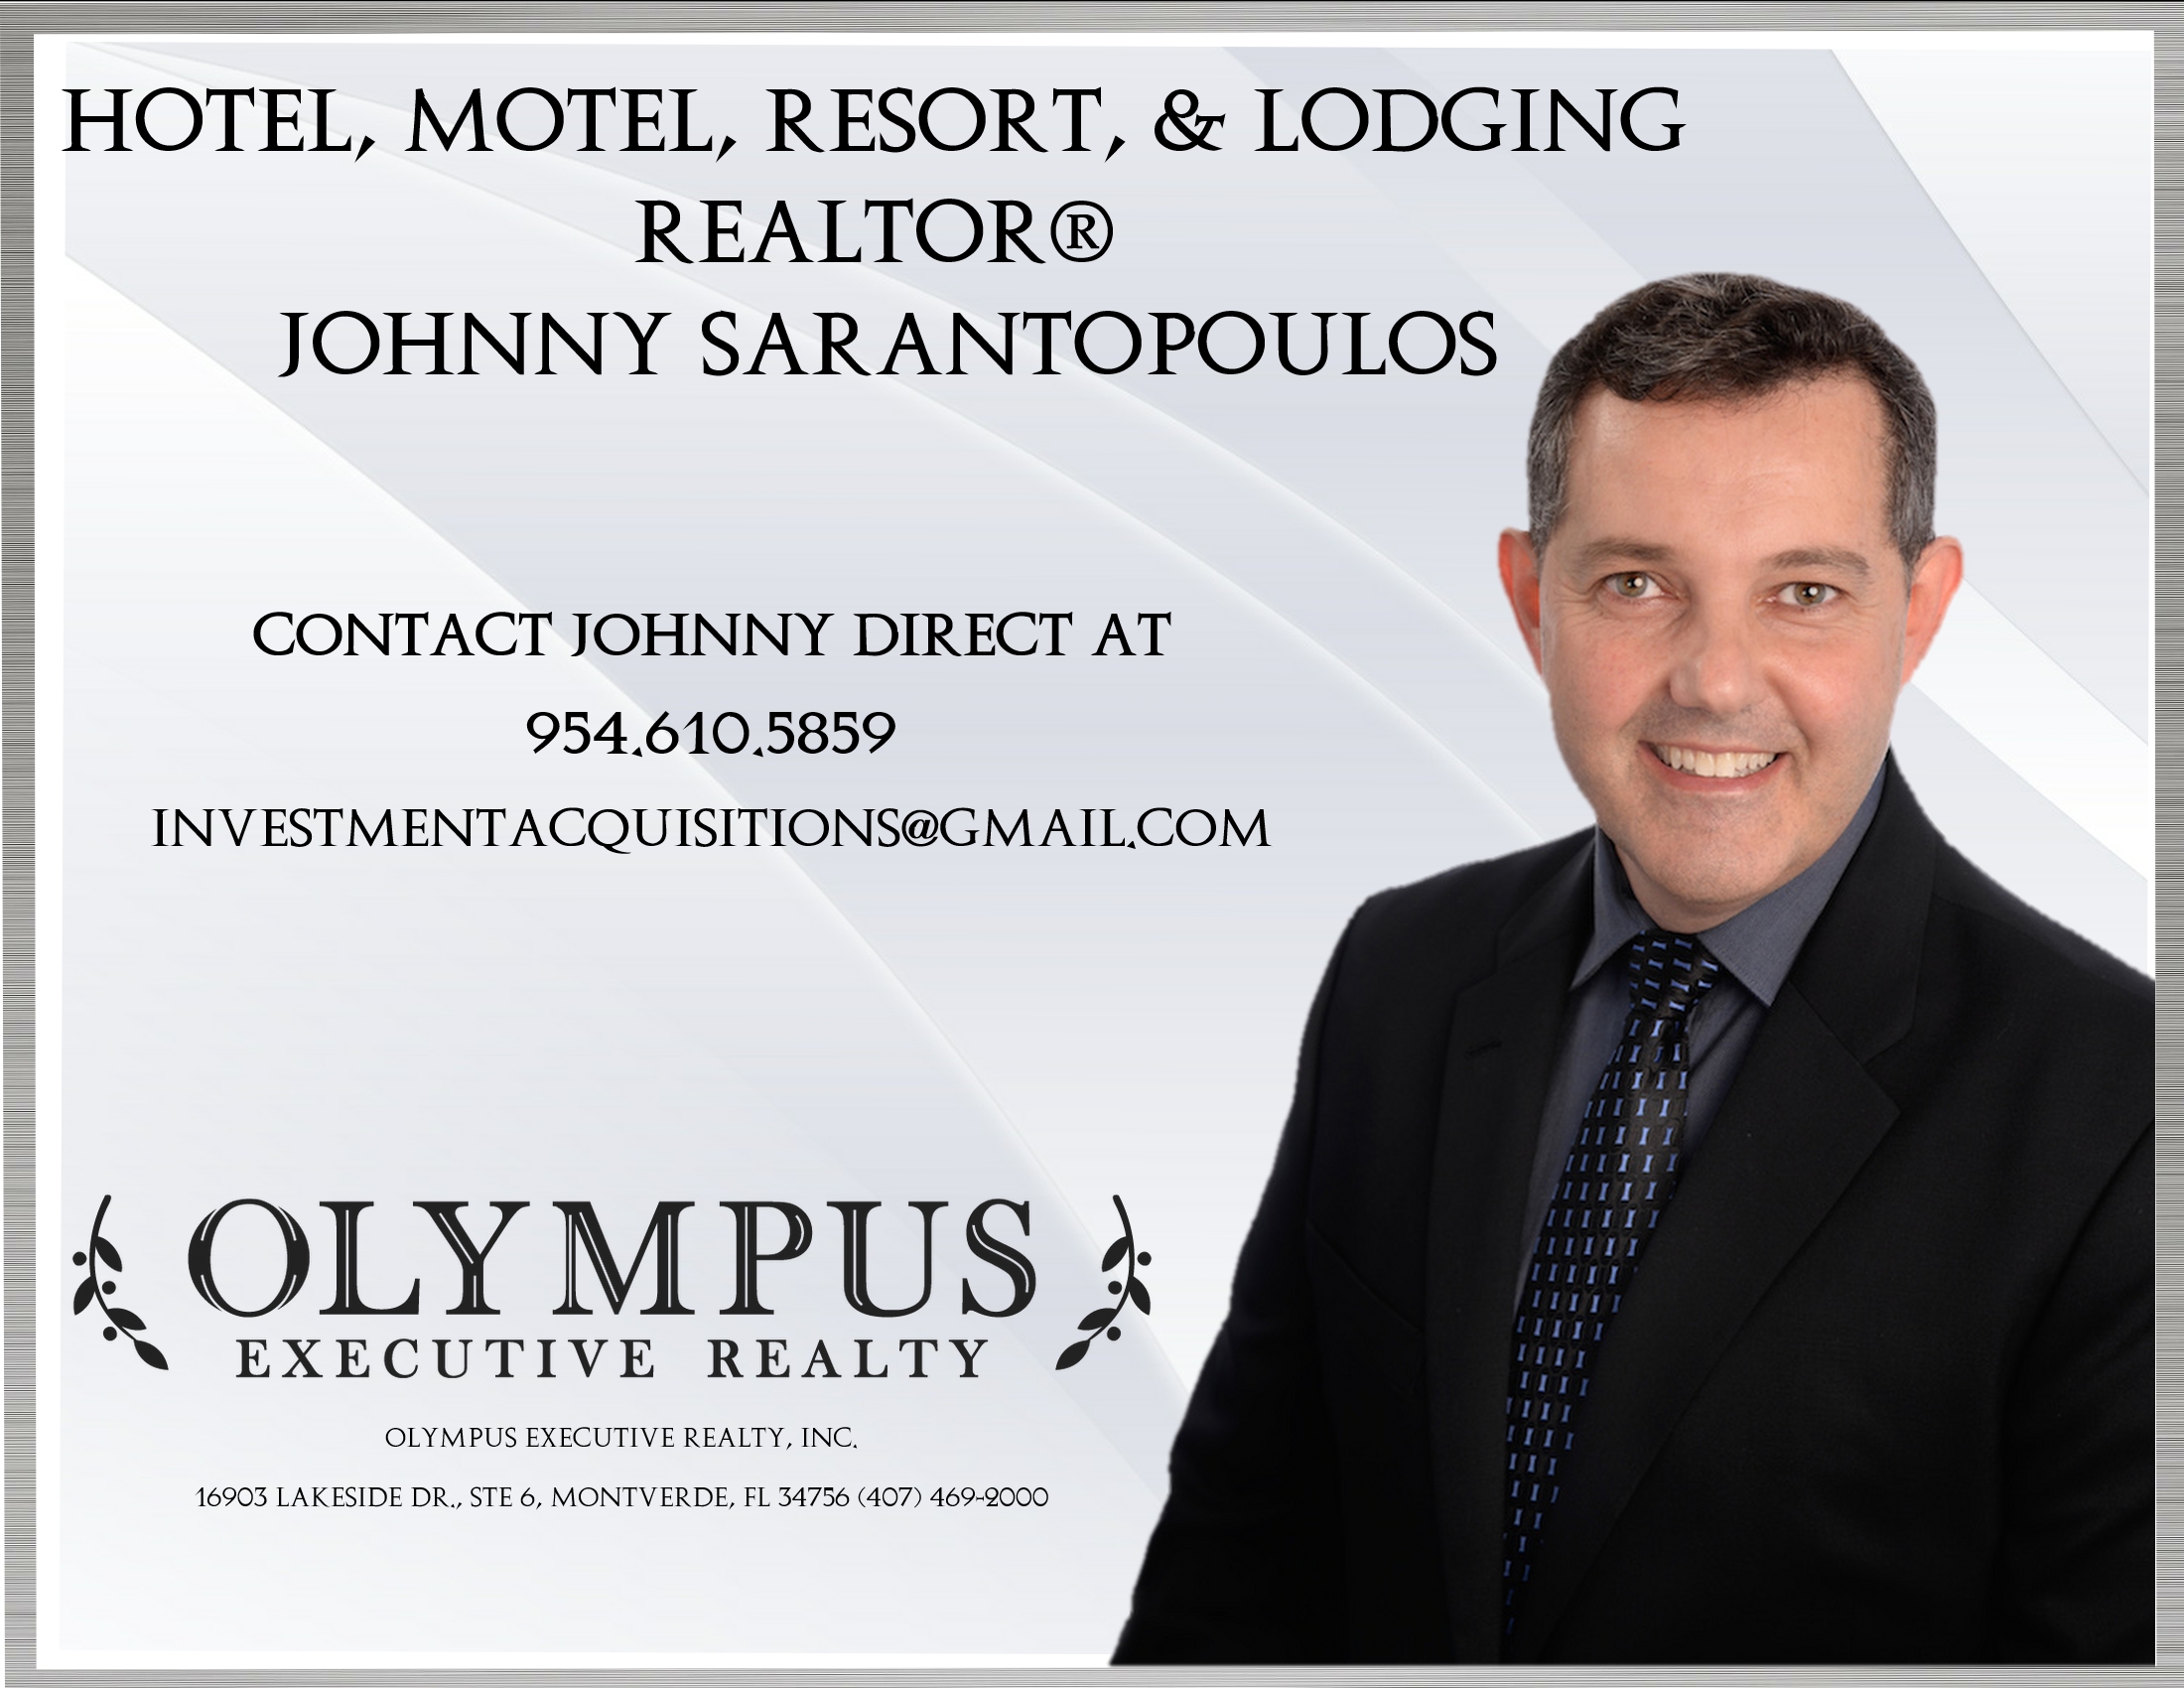 Miami_Beach_Hotel_Motel_Resort_Lodging_For_Sale.jpg